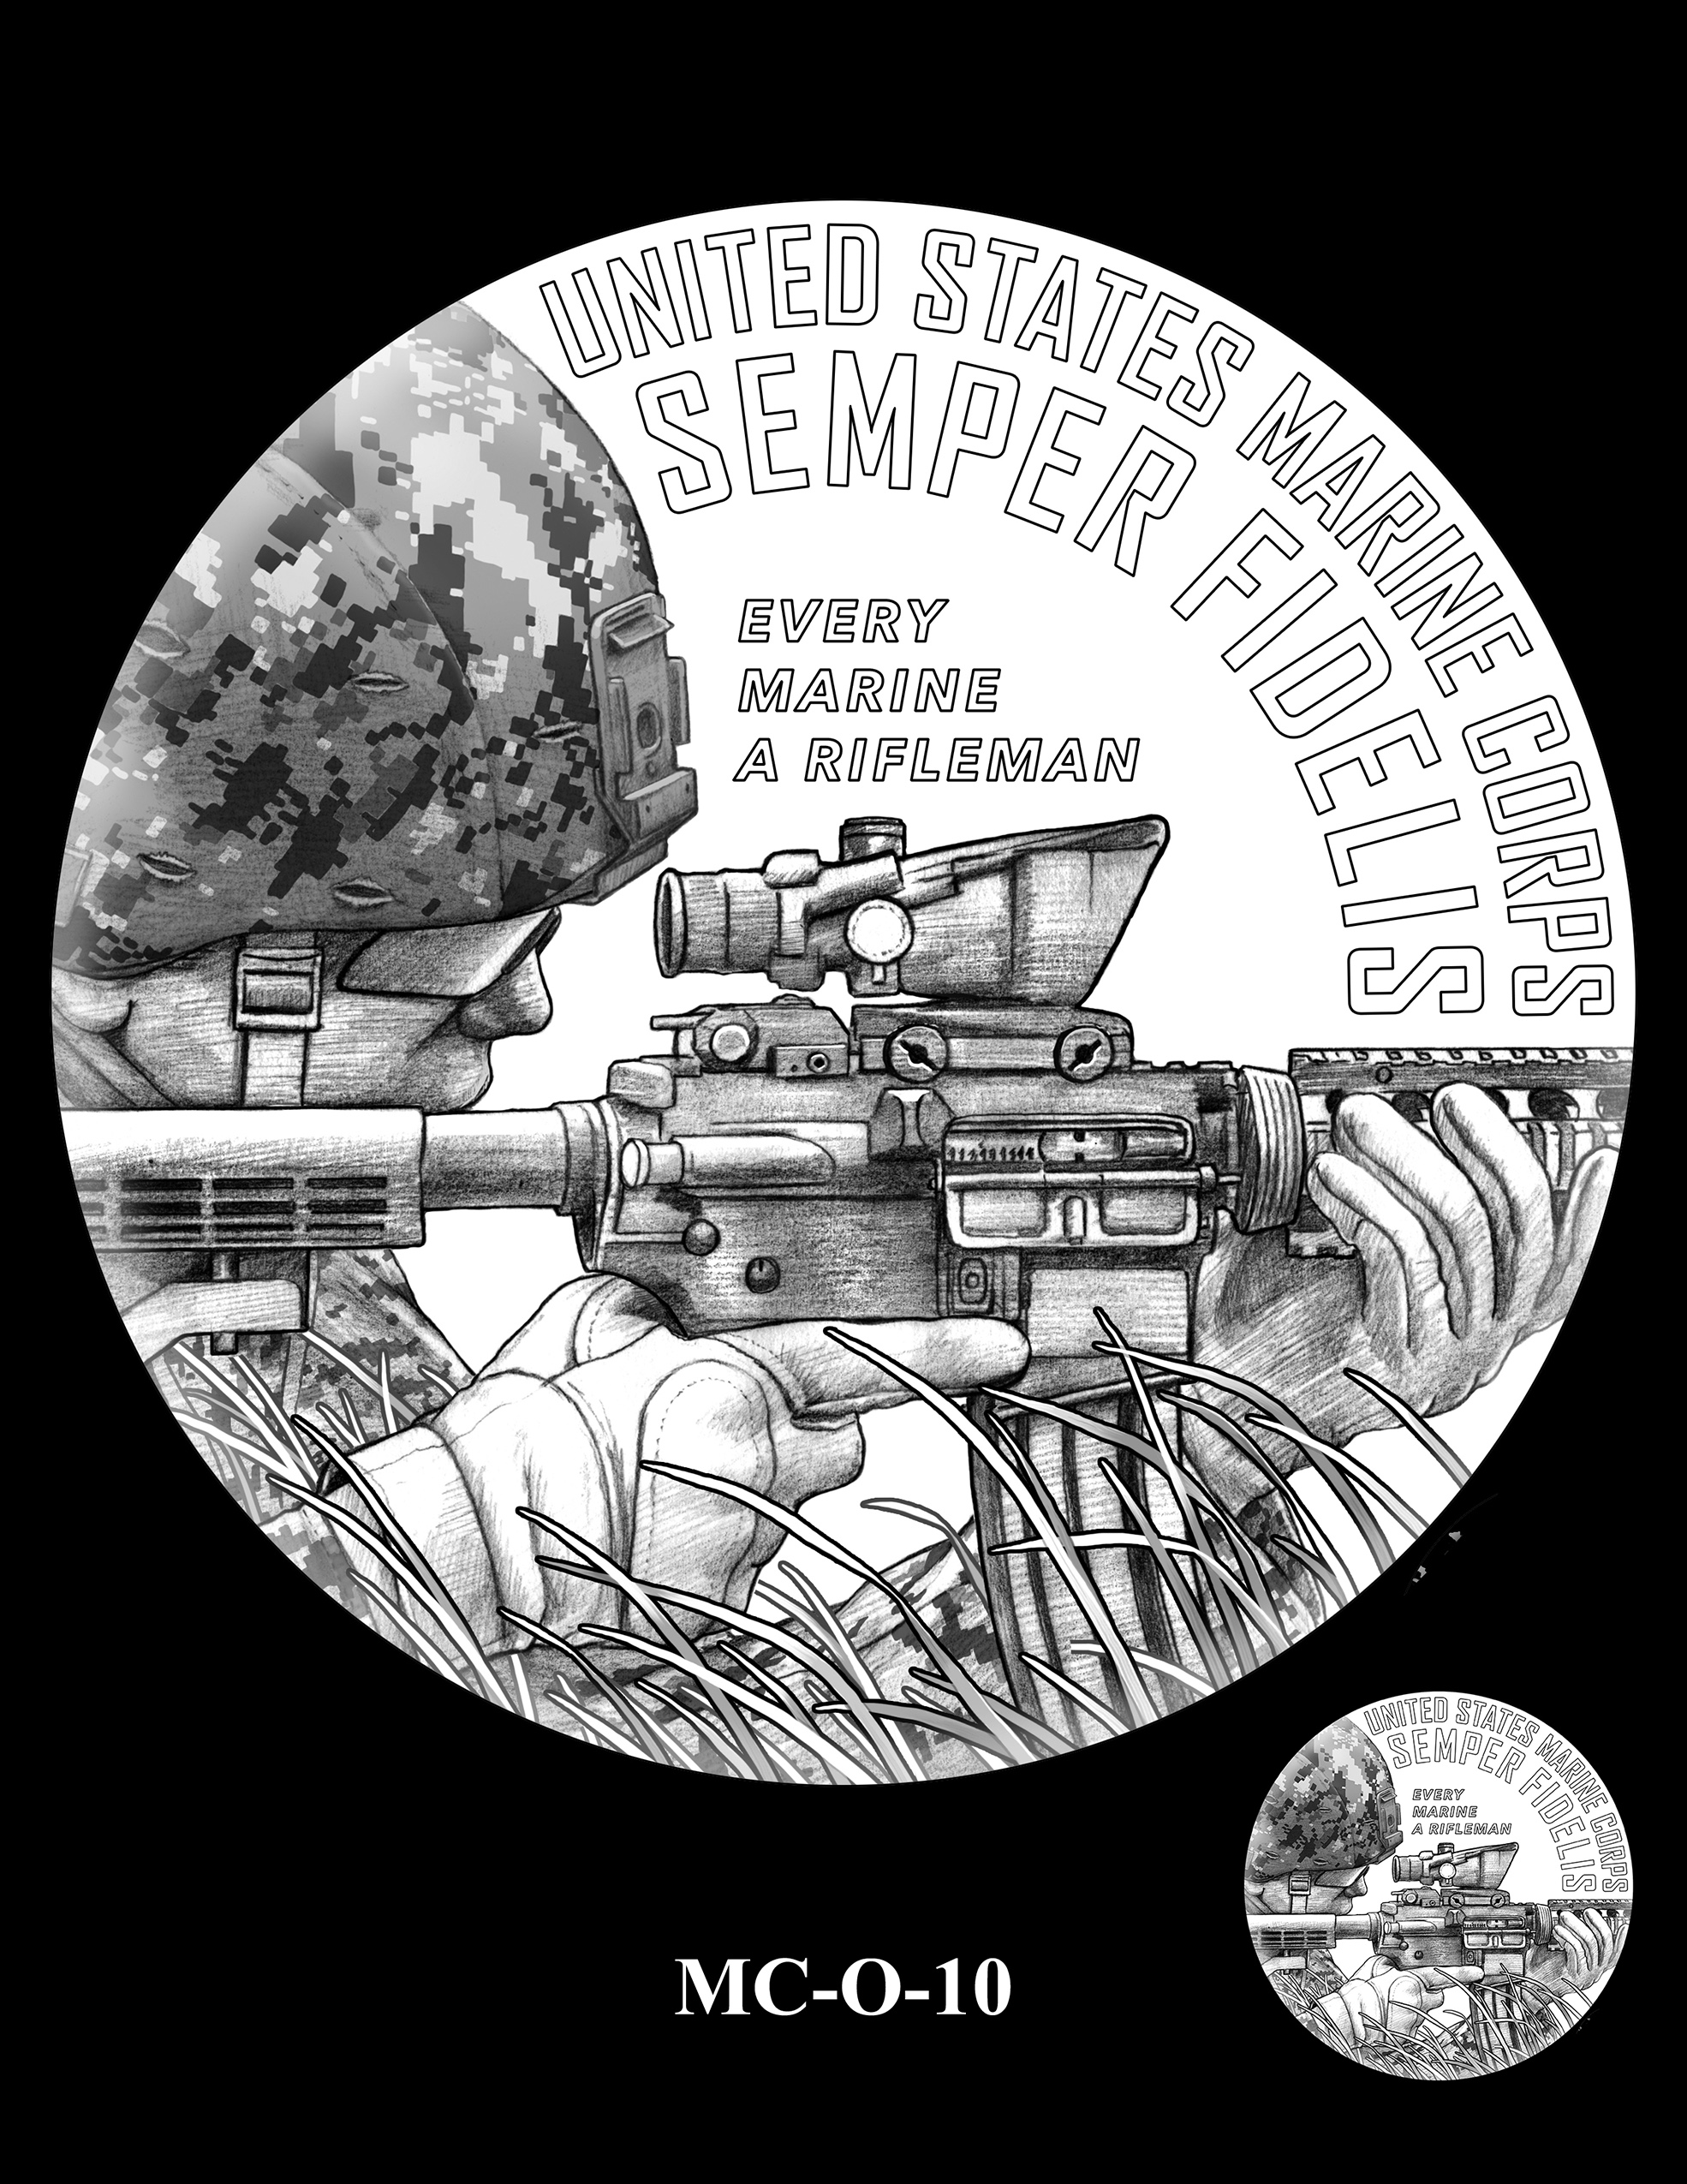 MC-O-10 -- United States Marine Corps Silver Medal